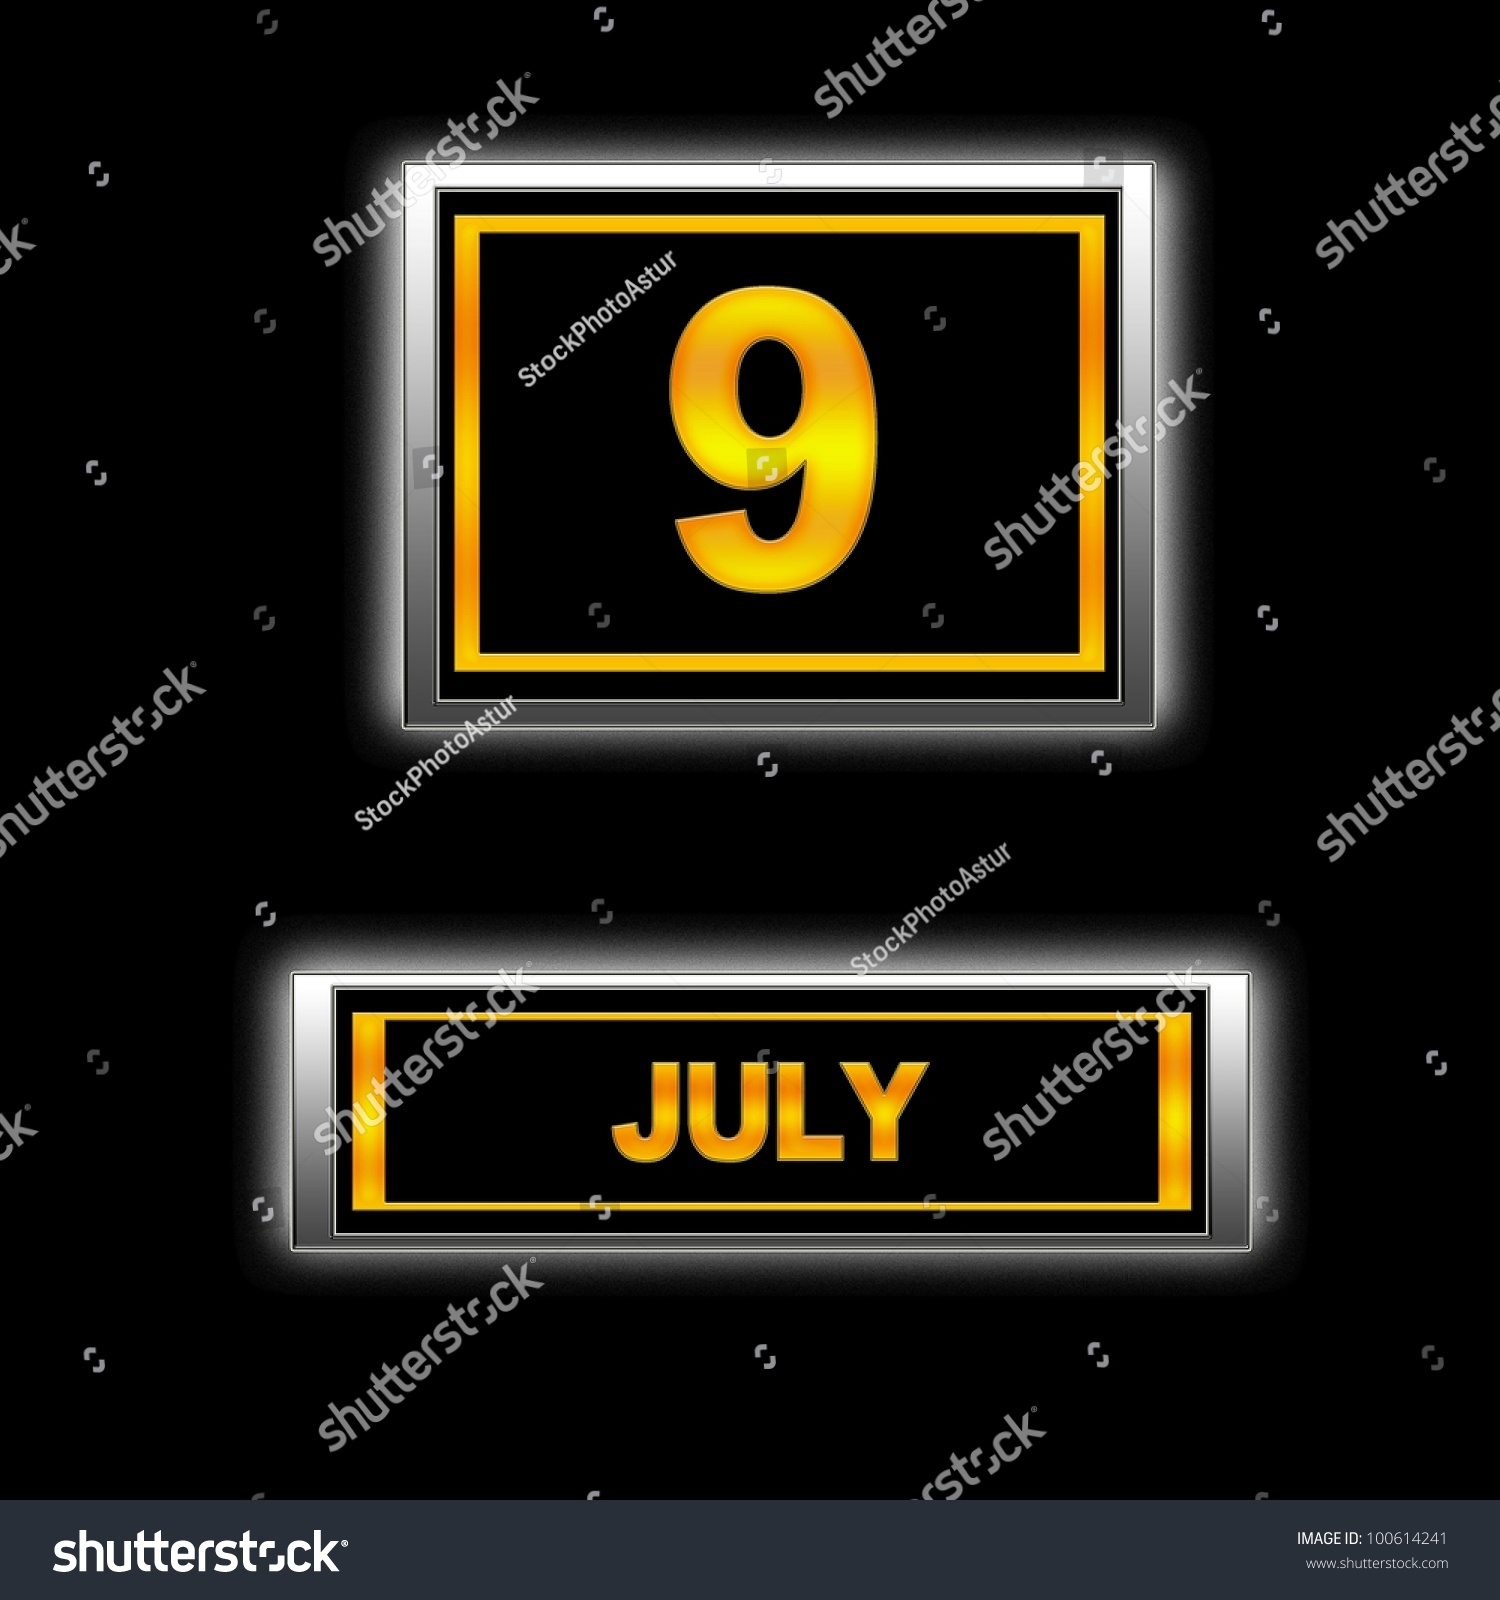 Illustration With Calendar, July 9. 100614241 Shutterstock